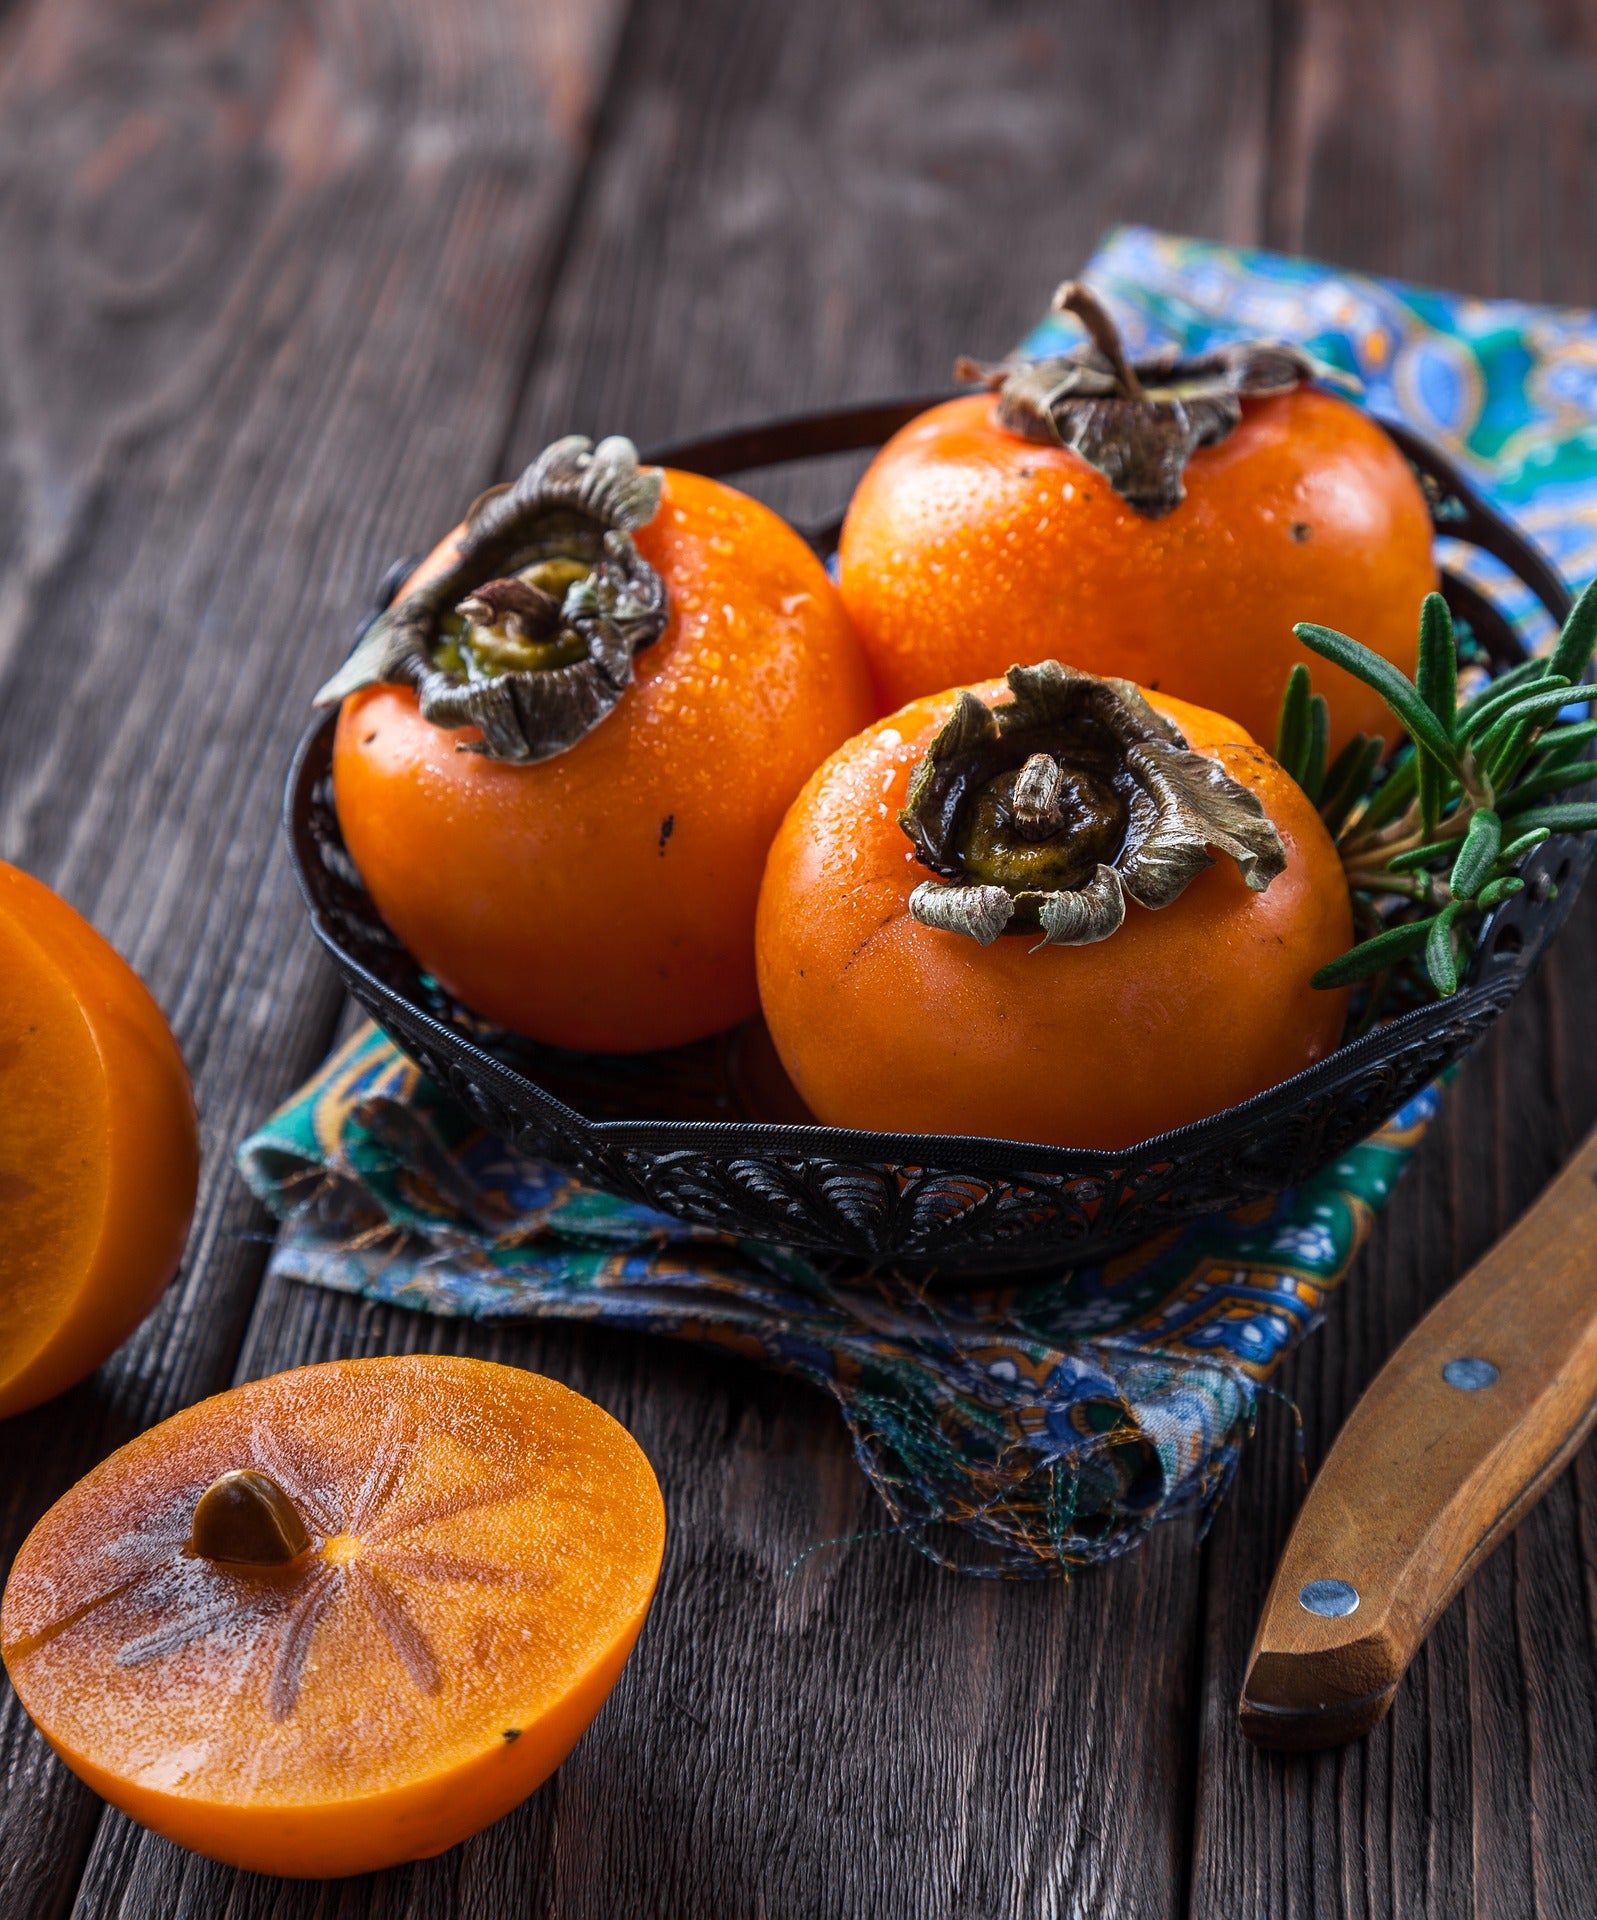 Growing Orange Fruit - Types Of Orange Colored Fruit